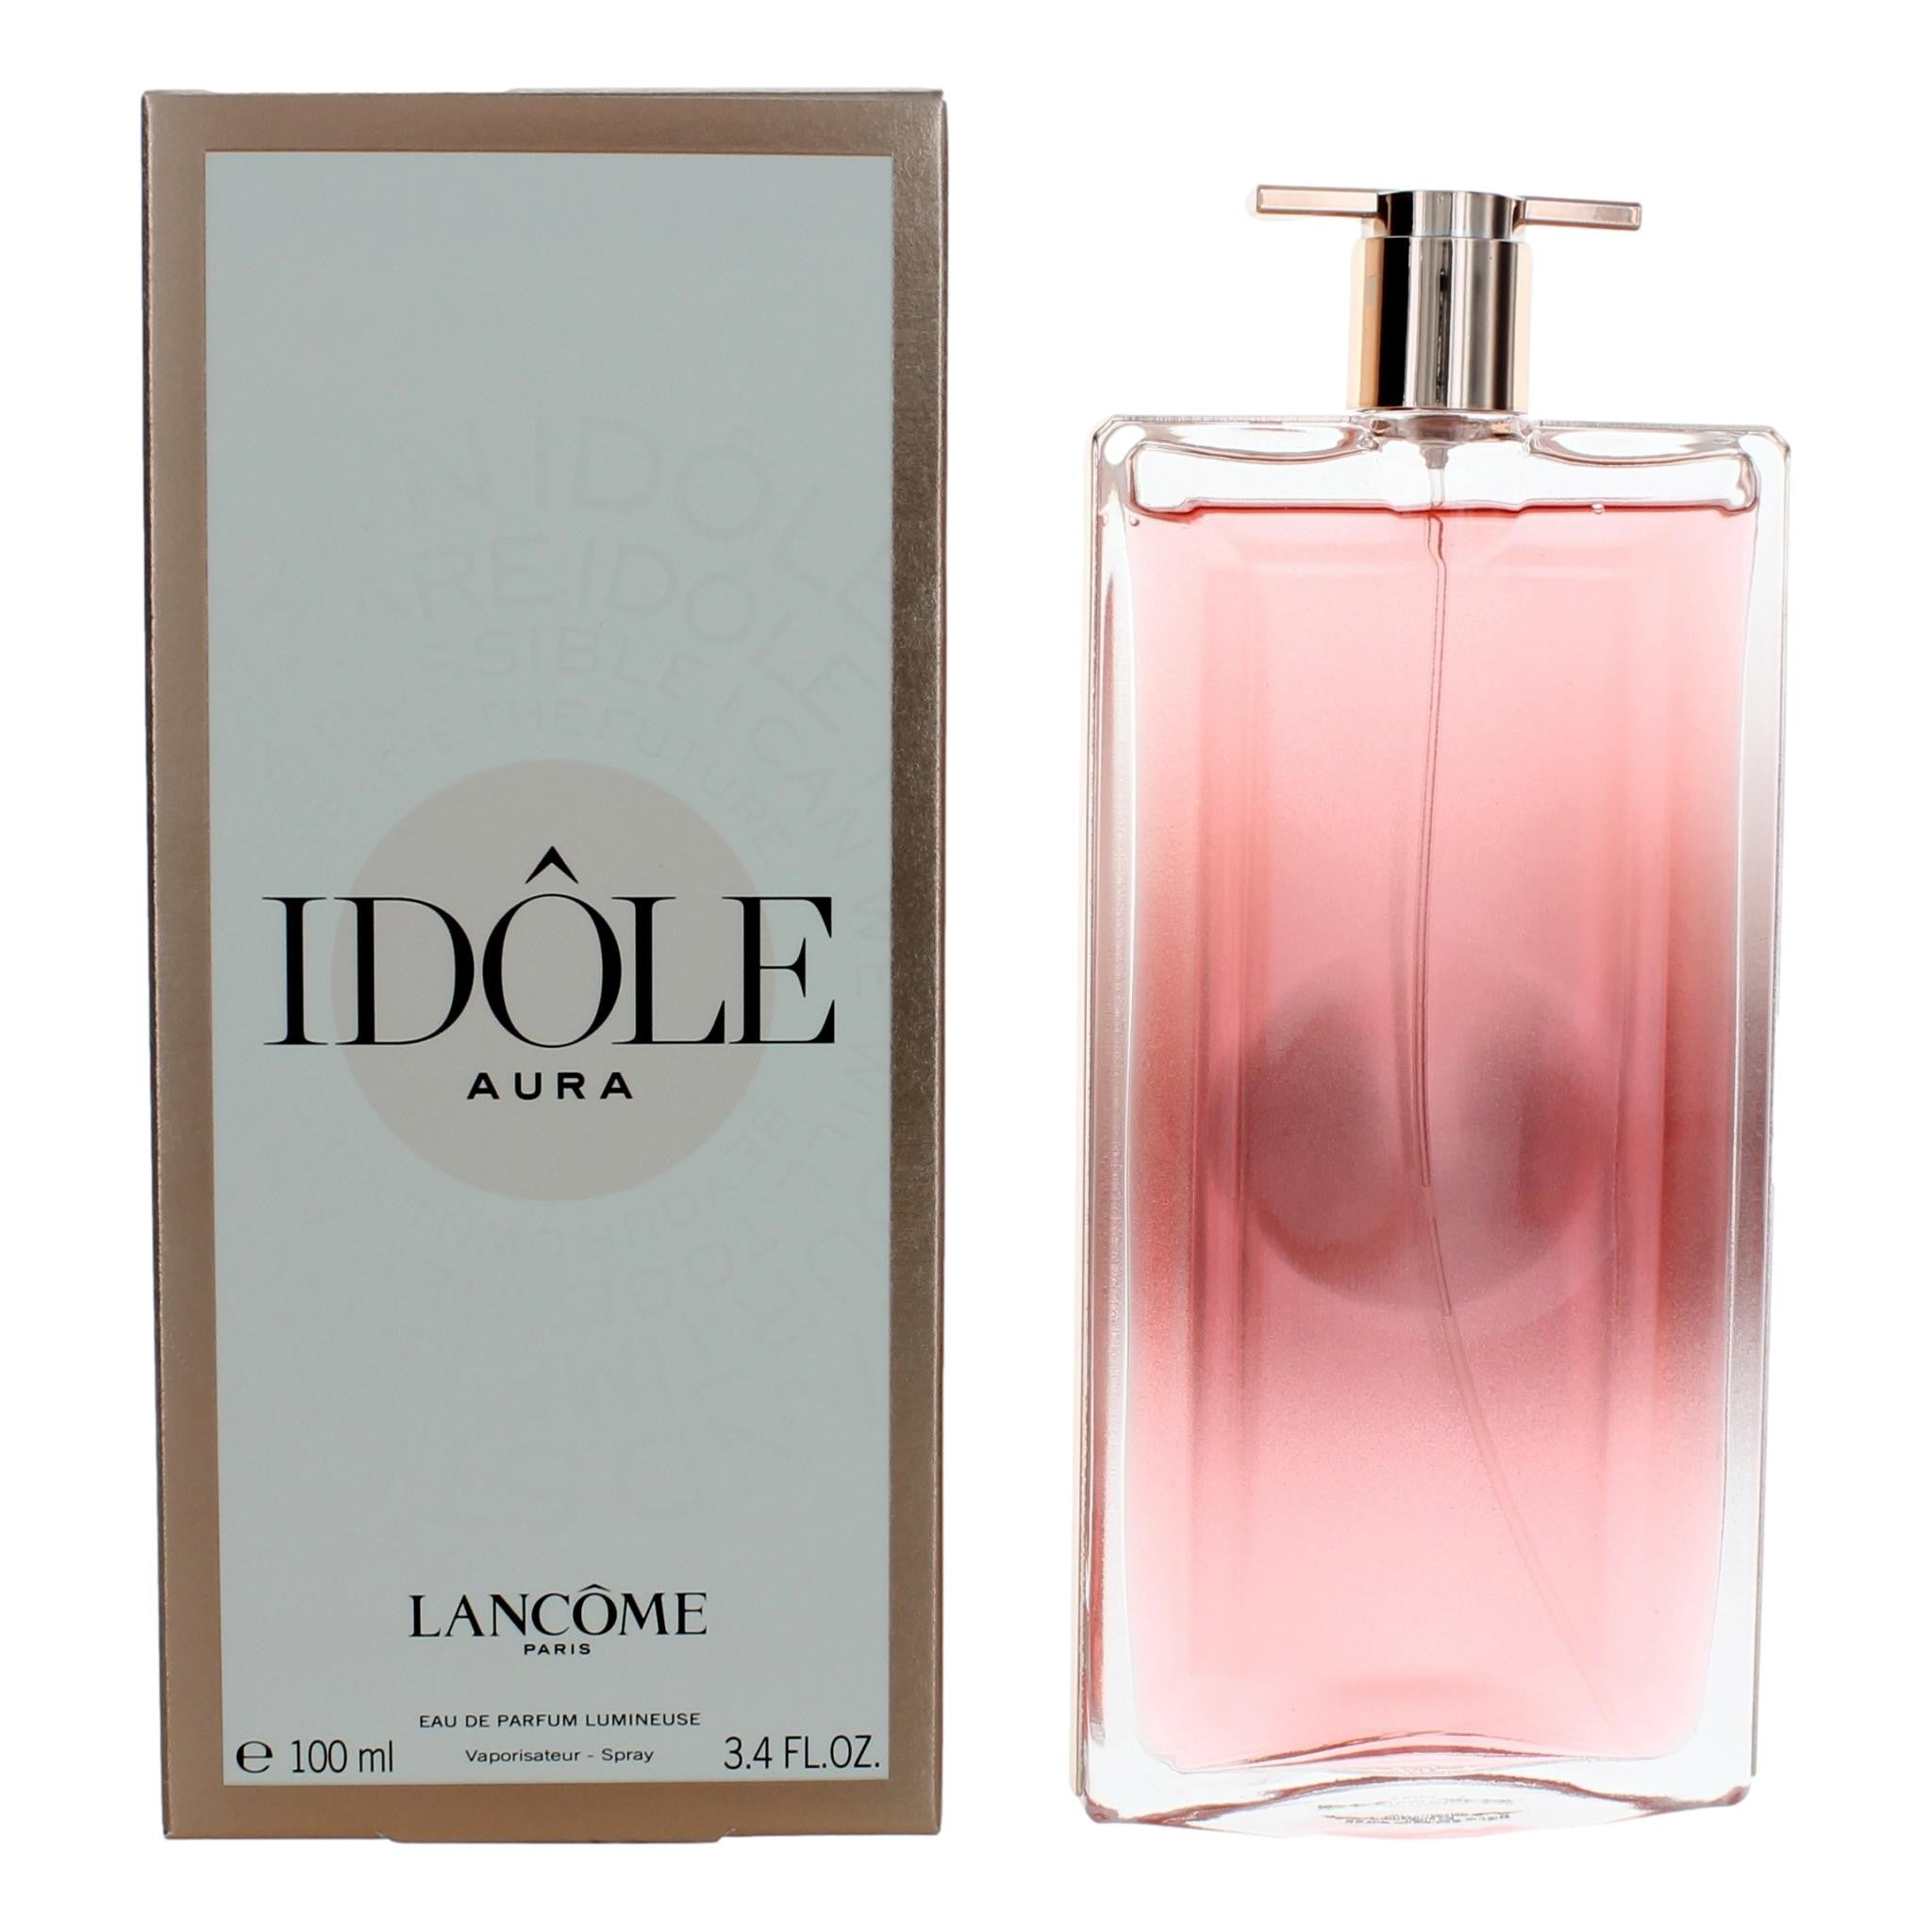 Bottle of Idole Aura by Lancome, 3.4 oz Eau De Parfum Lumineuse Spray for Women